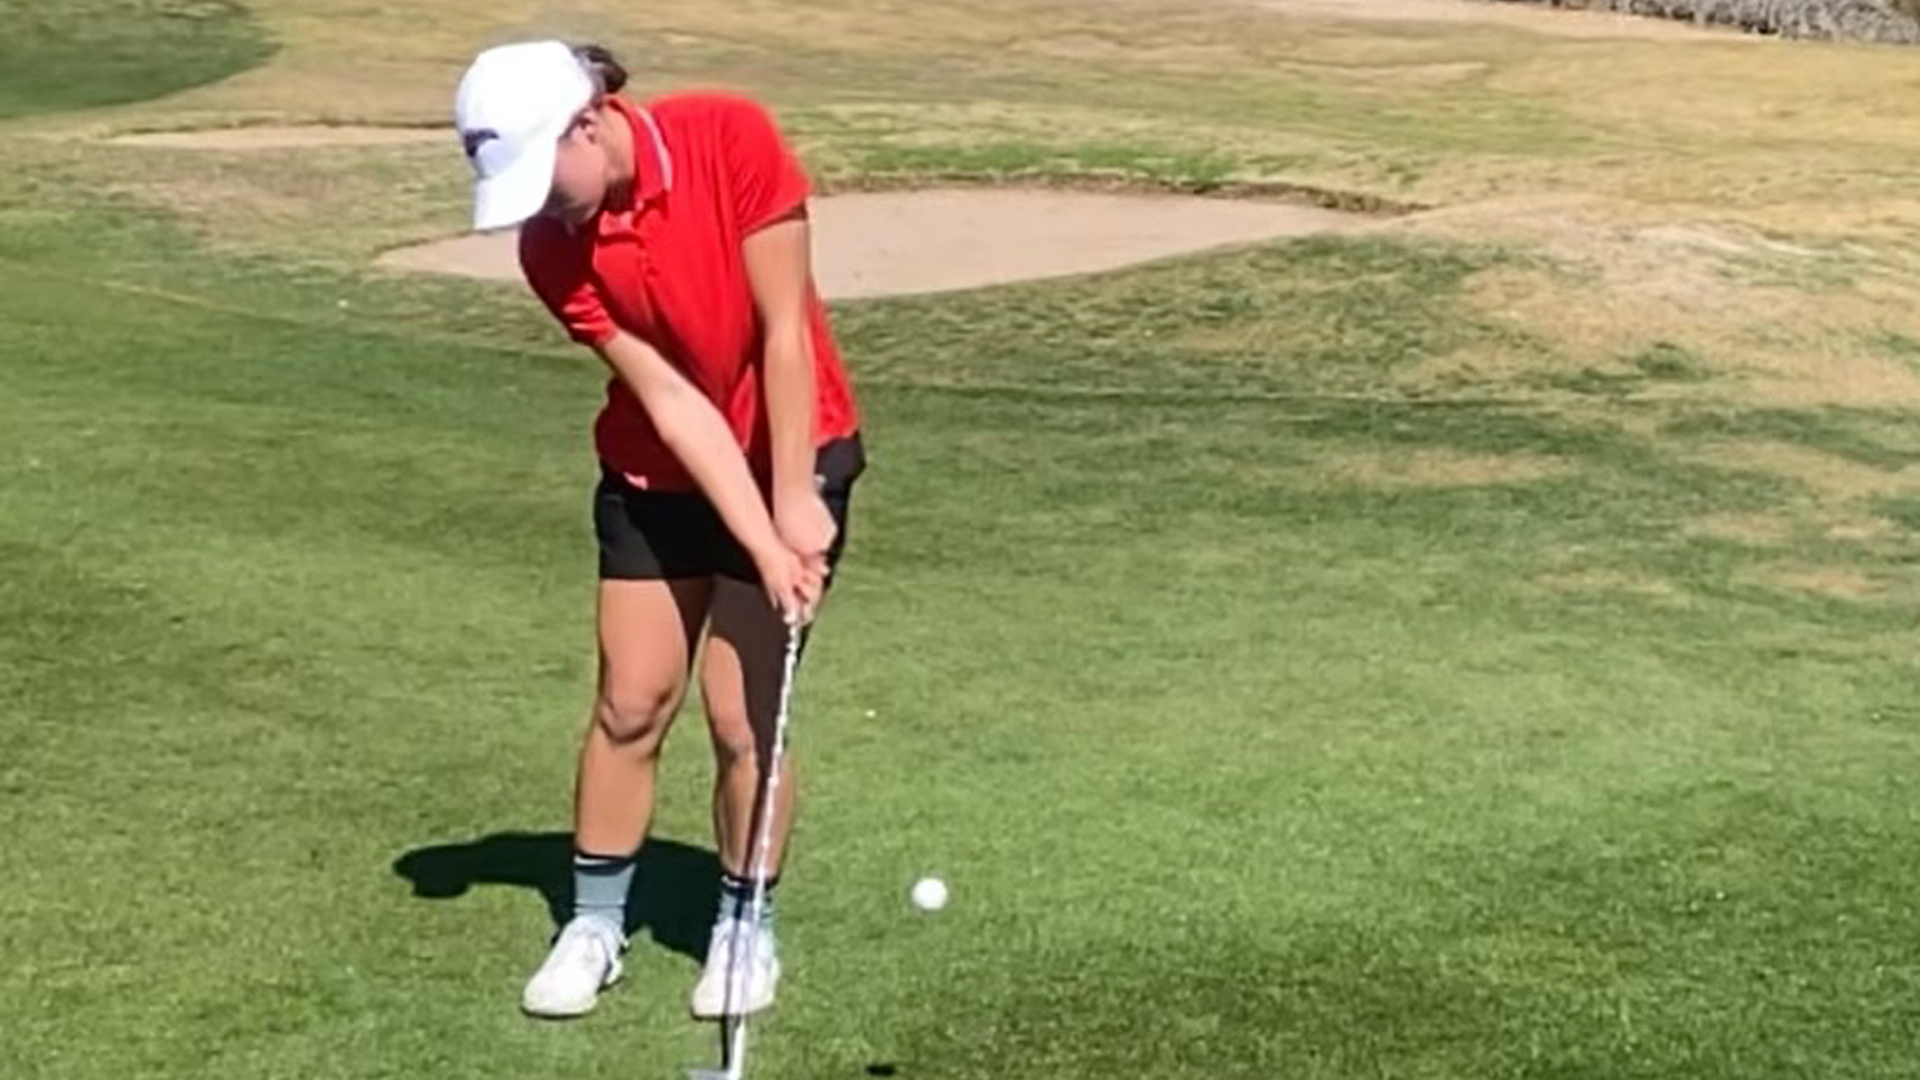 (#6) Mesa women's golf wins 13th consecutive event